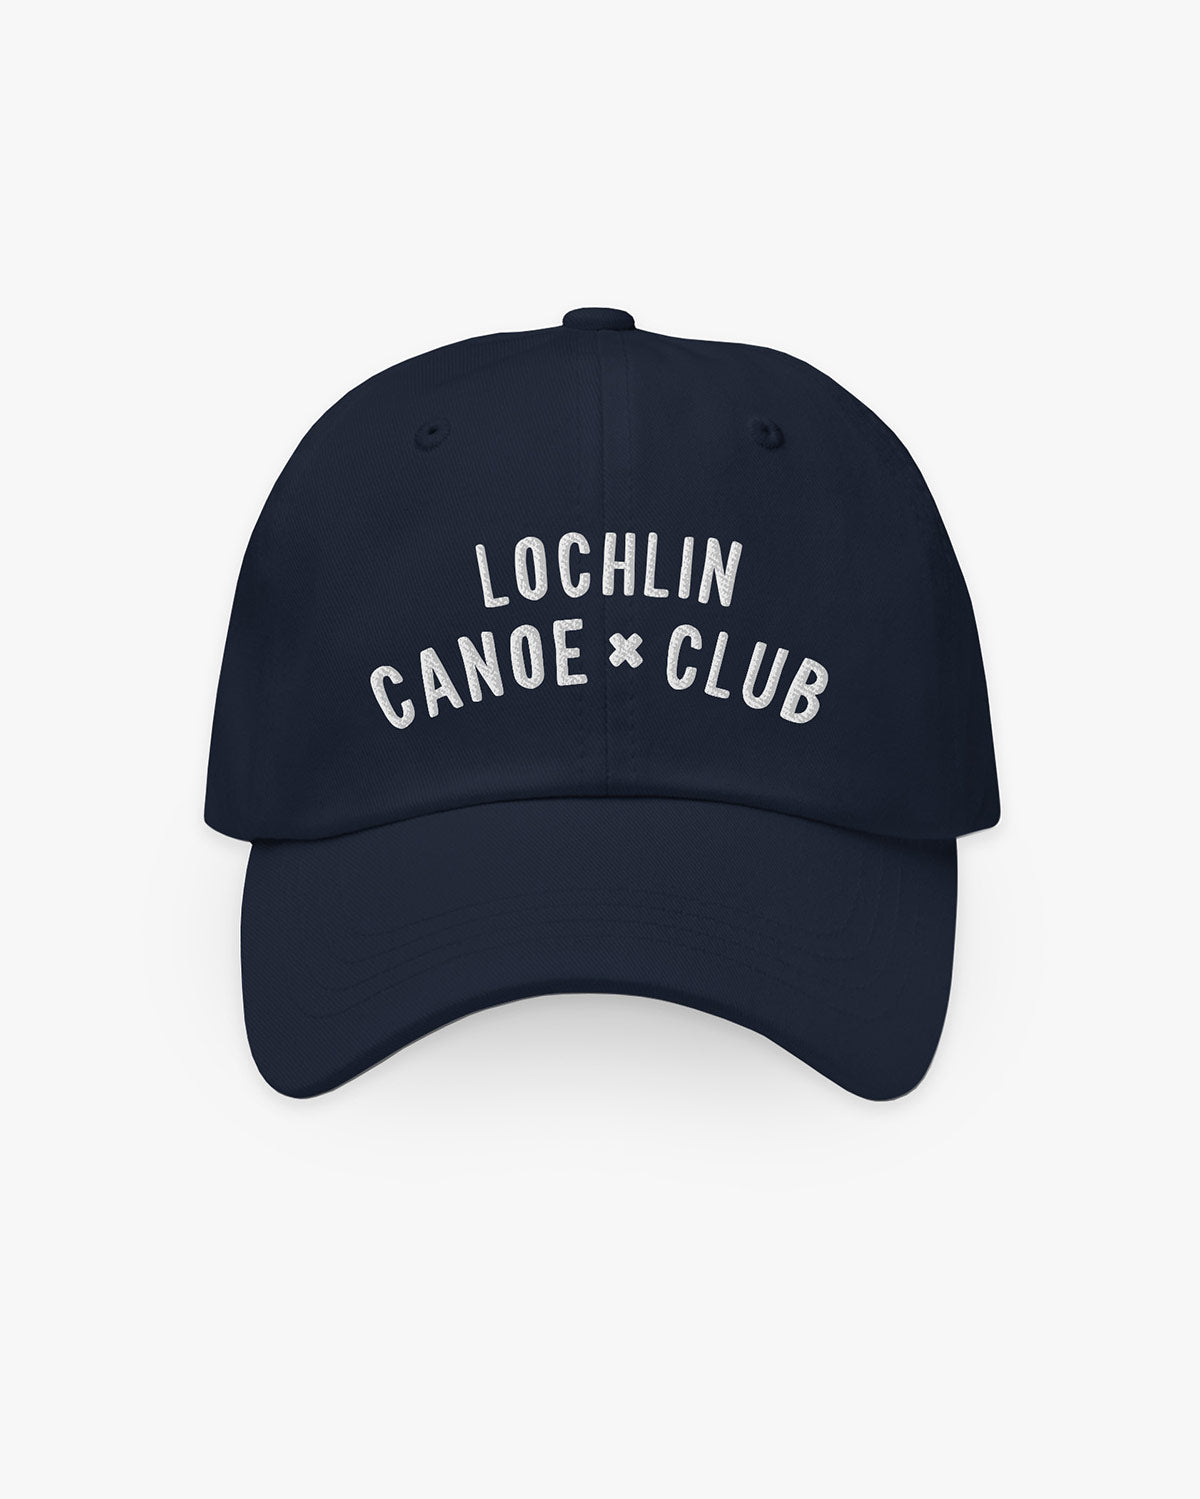 Canoe Club - Lochlin - Hat